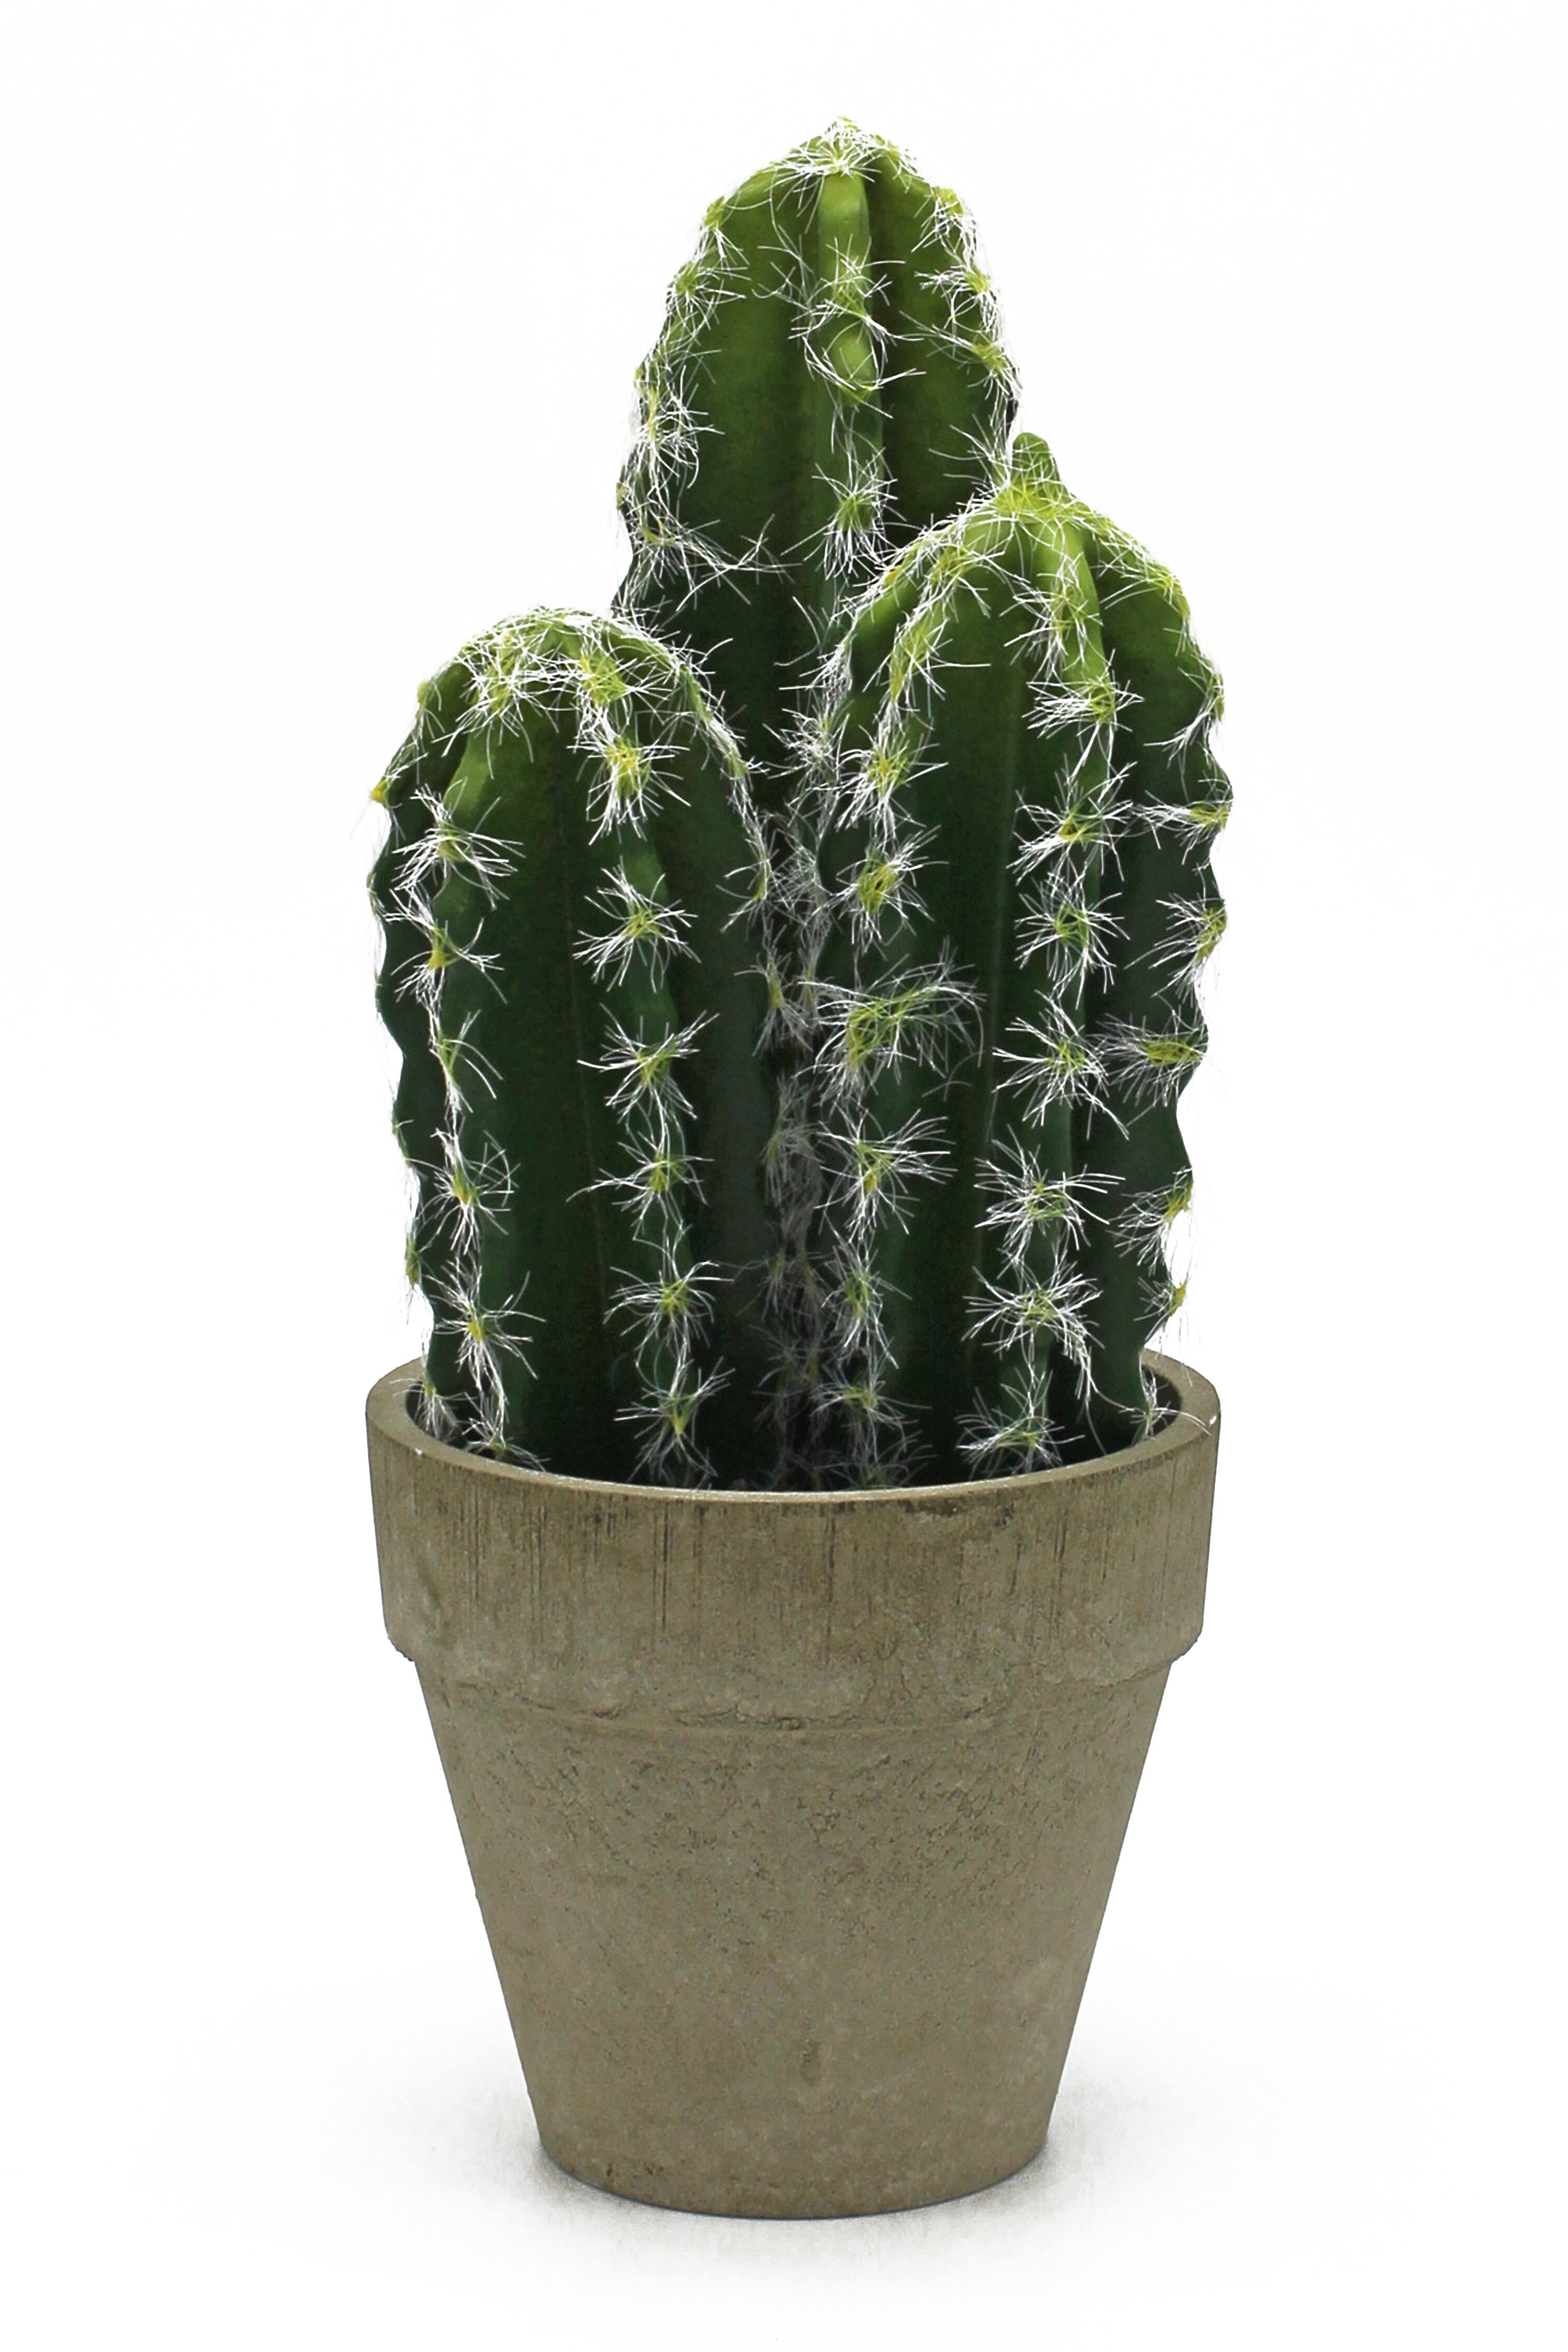 Planta artificial cactus de 25 cm de altura en maceta de 10.5 cm